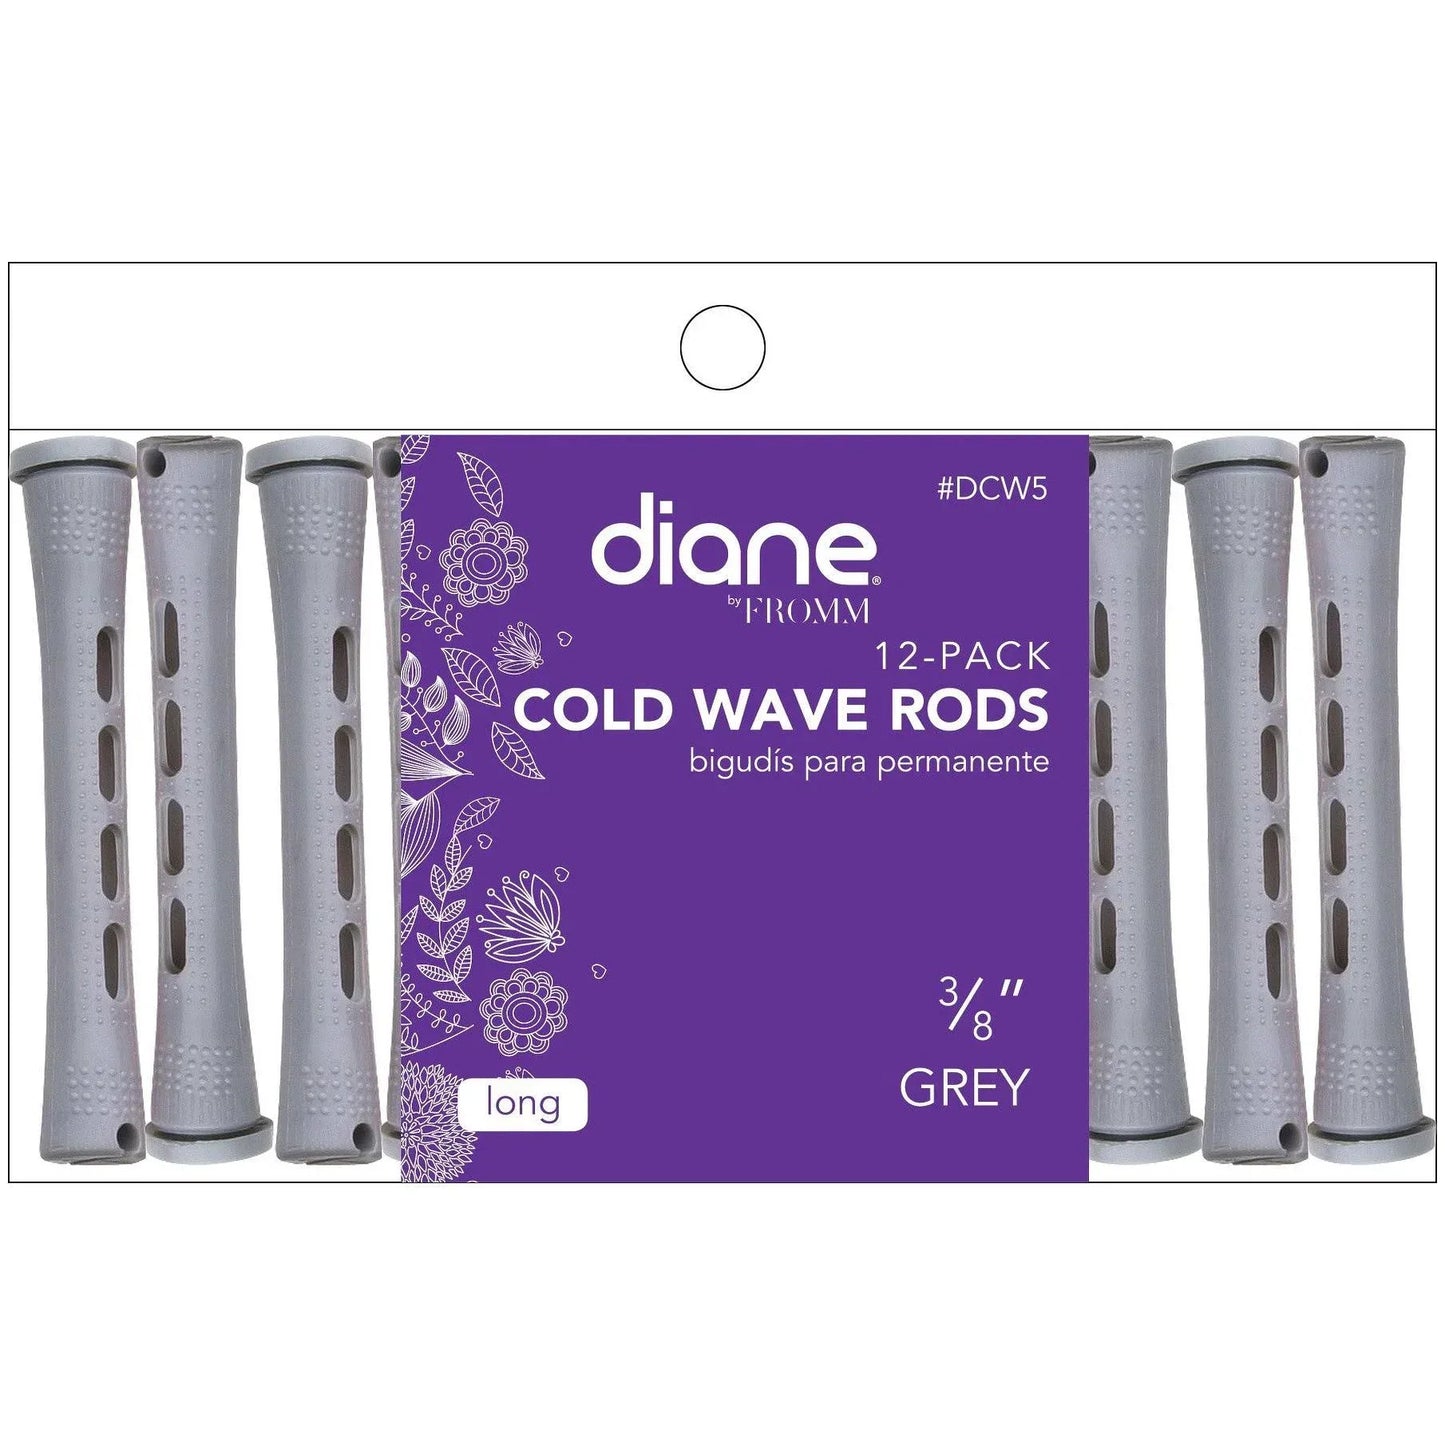 Diane Cold Wave Rods